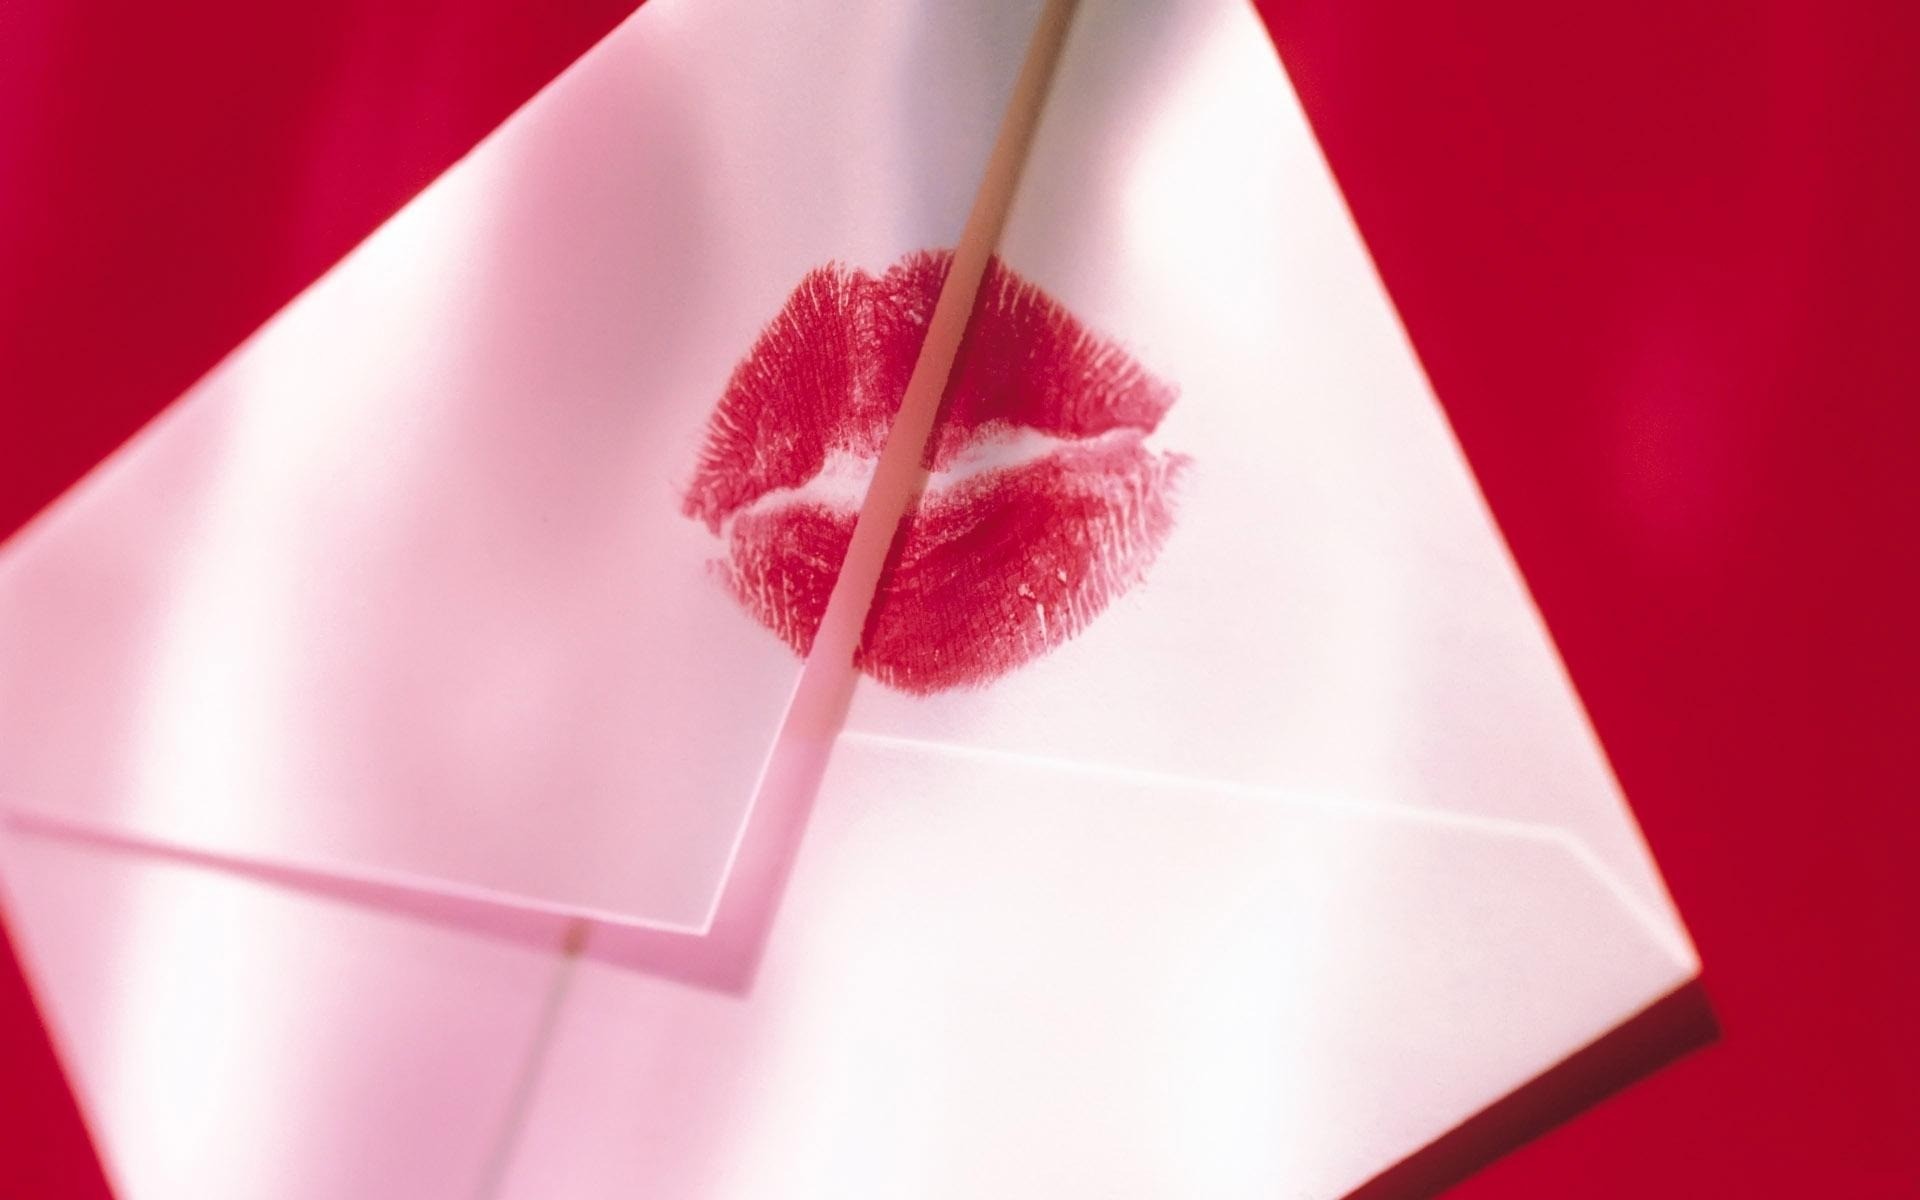 kissing, envelope - desktop wallpaper